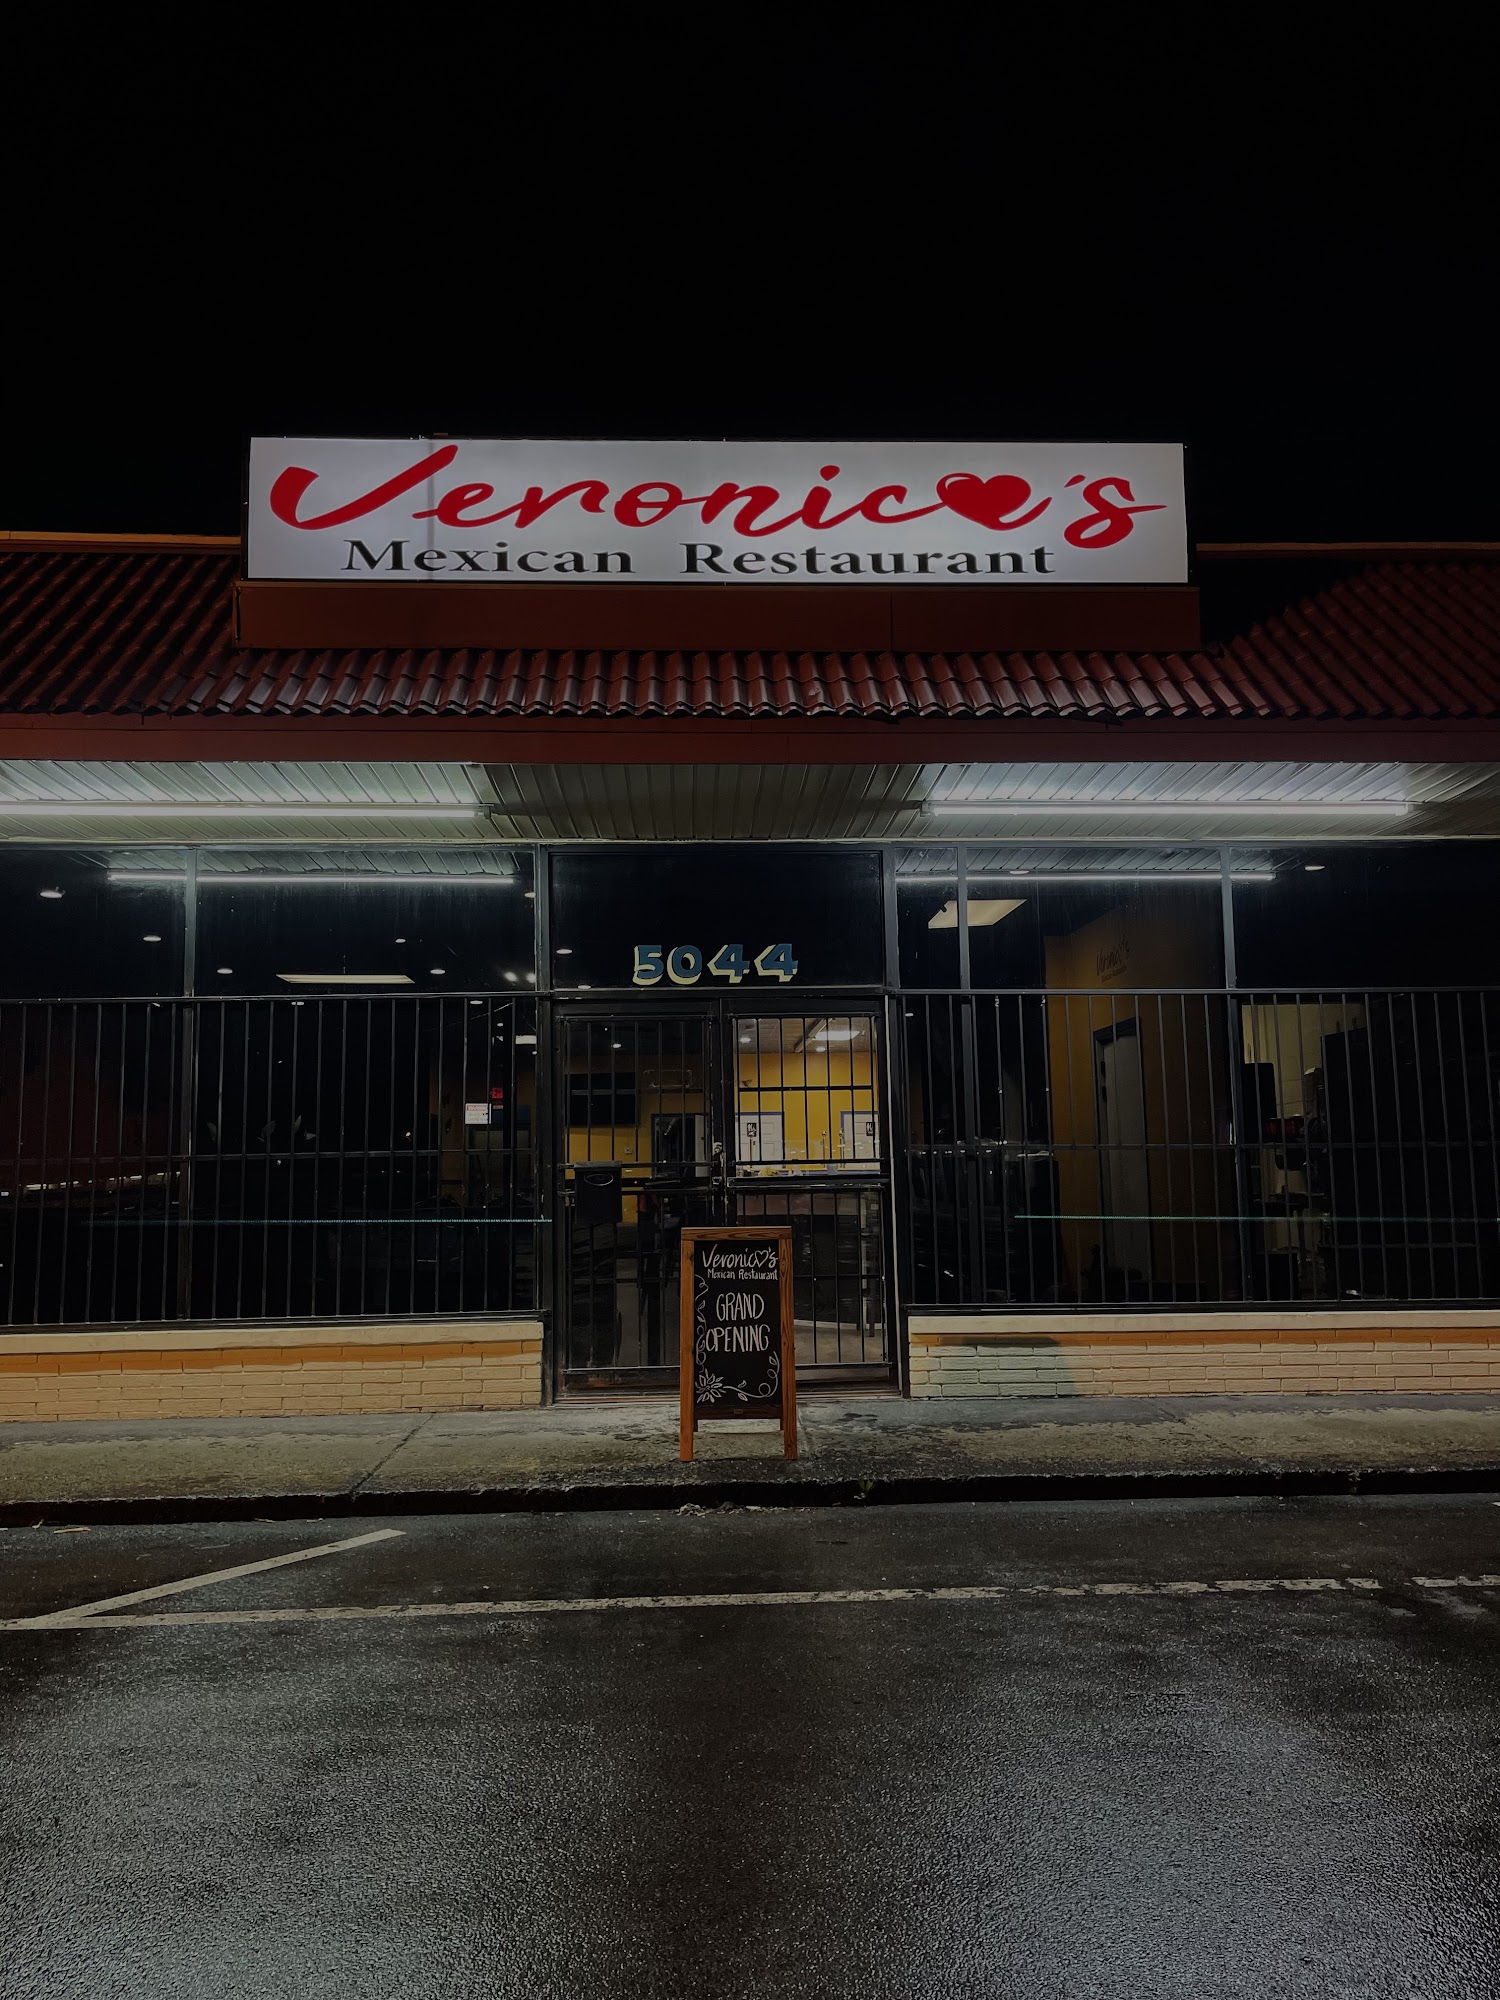 Veronica’s Mexican Restaurant